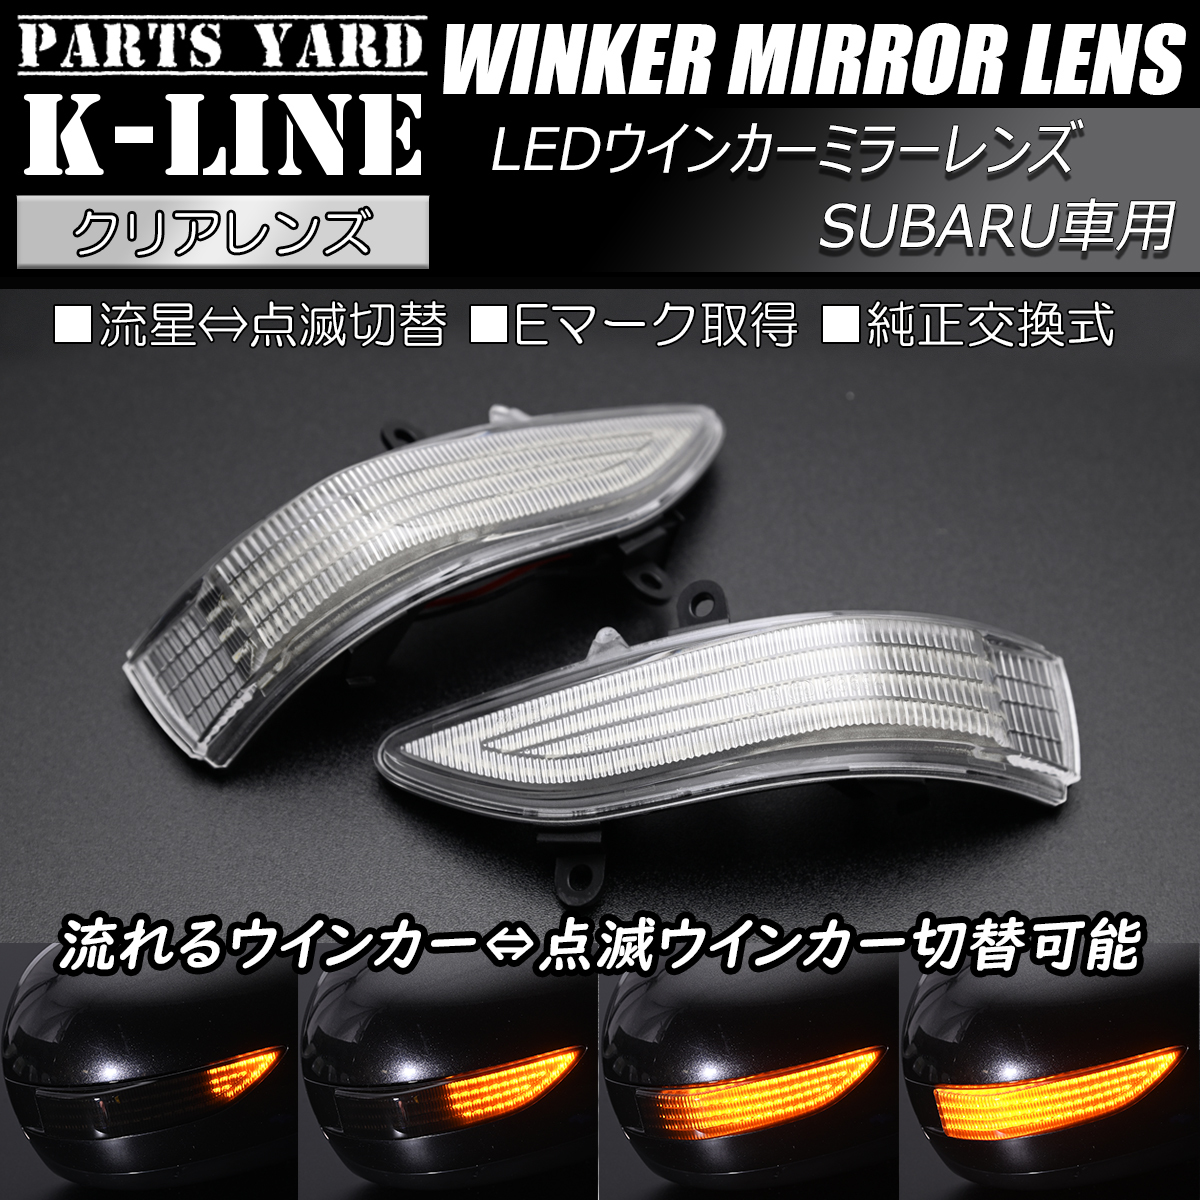 SB310DC [LED180 departure ] Subaru sequential = blinking LED winker mirror lens clear door mirror GVB/GVF/GRB/GRF Impreza WRX STI